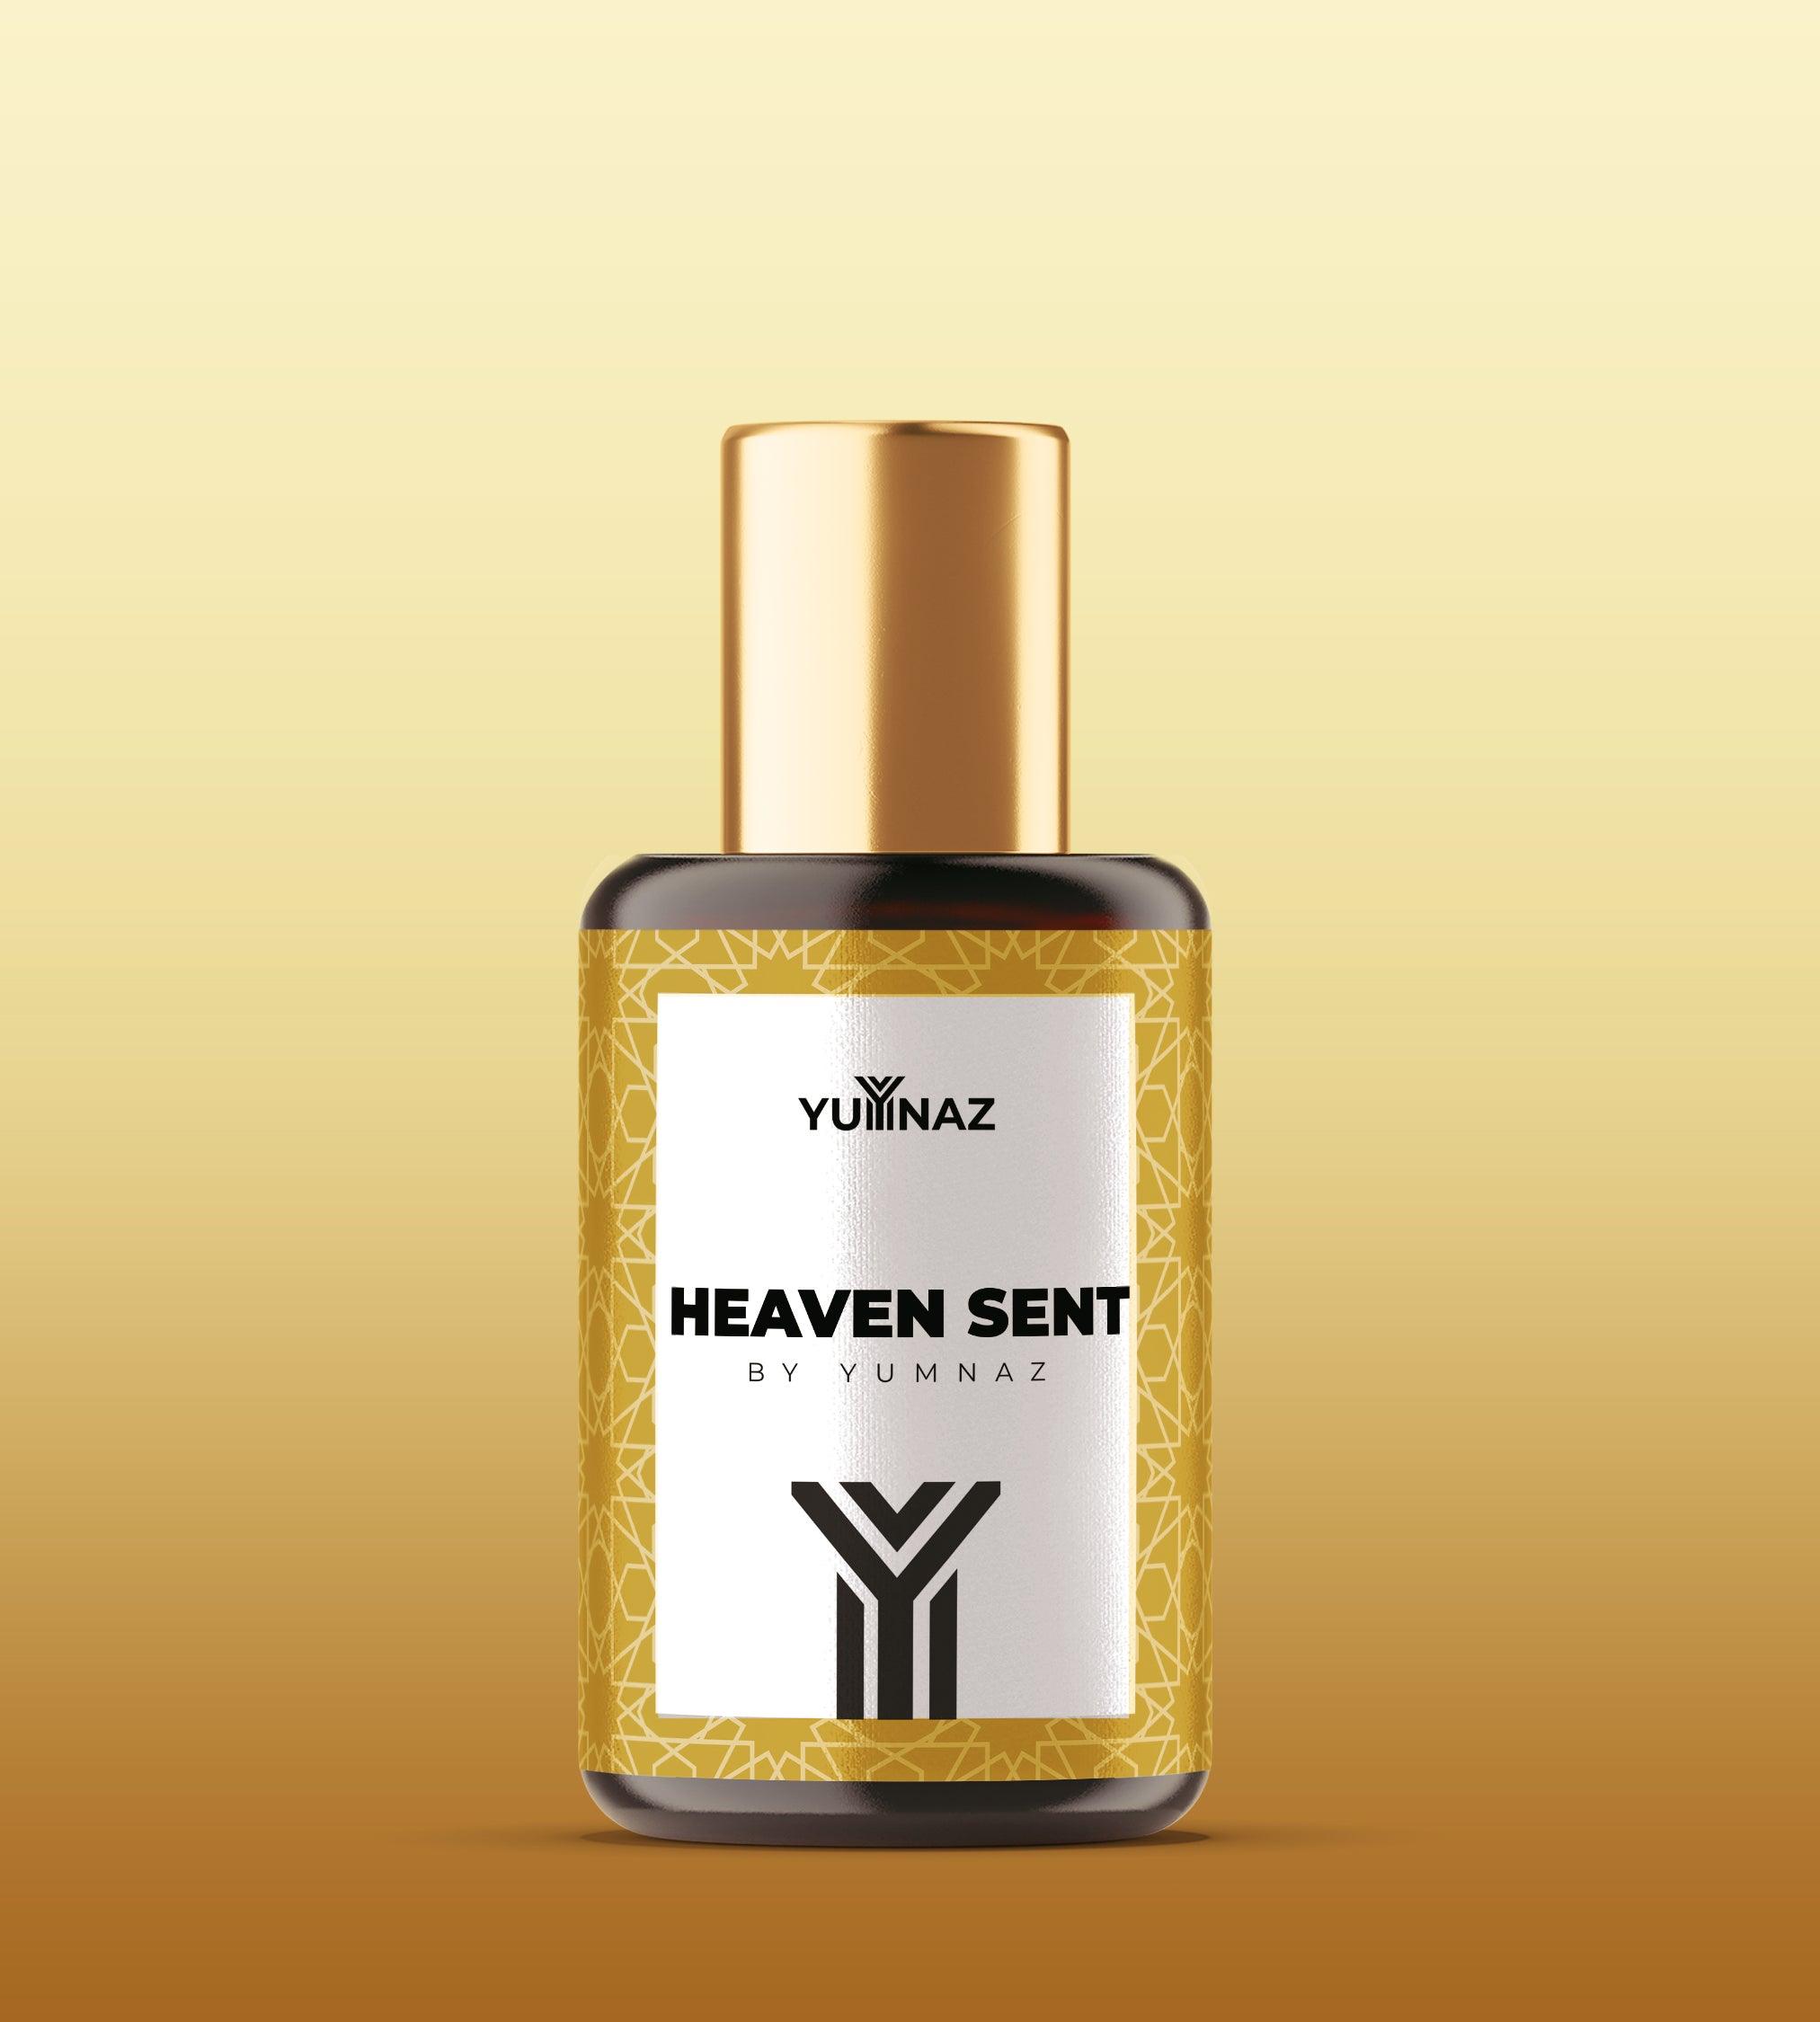 Heaven Sent by Yumnaz - Impression of Elie Saab Perfume | Perfume Price in Pakistan